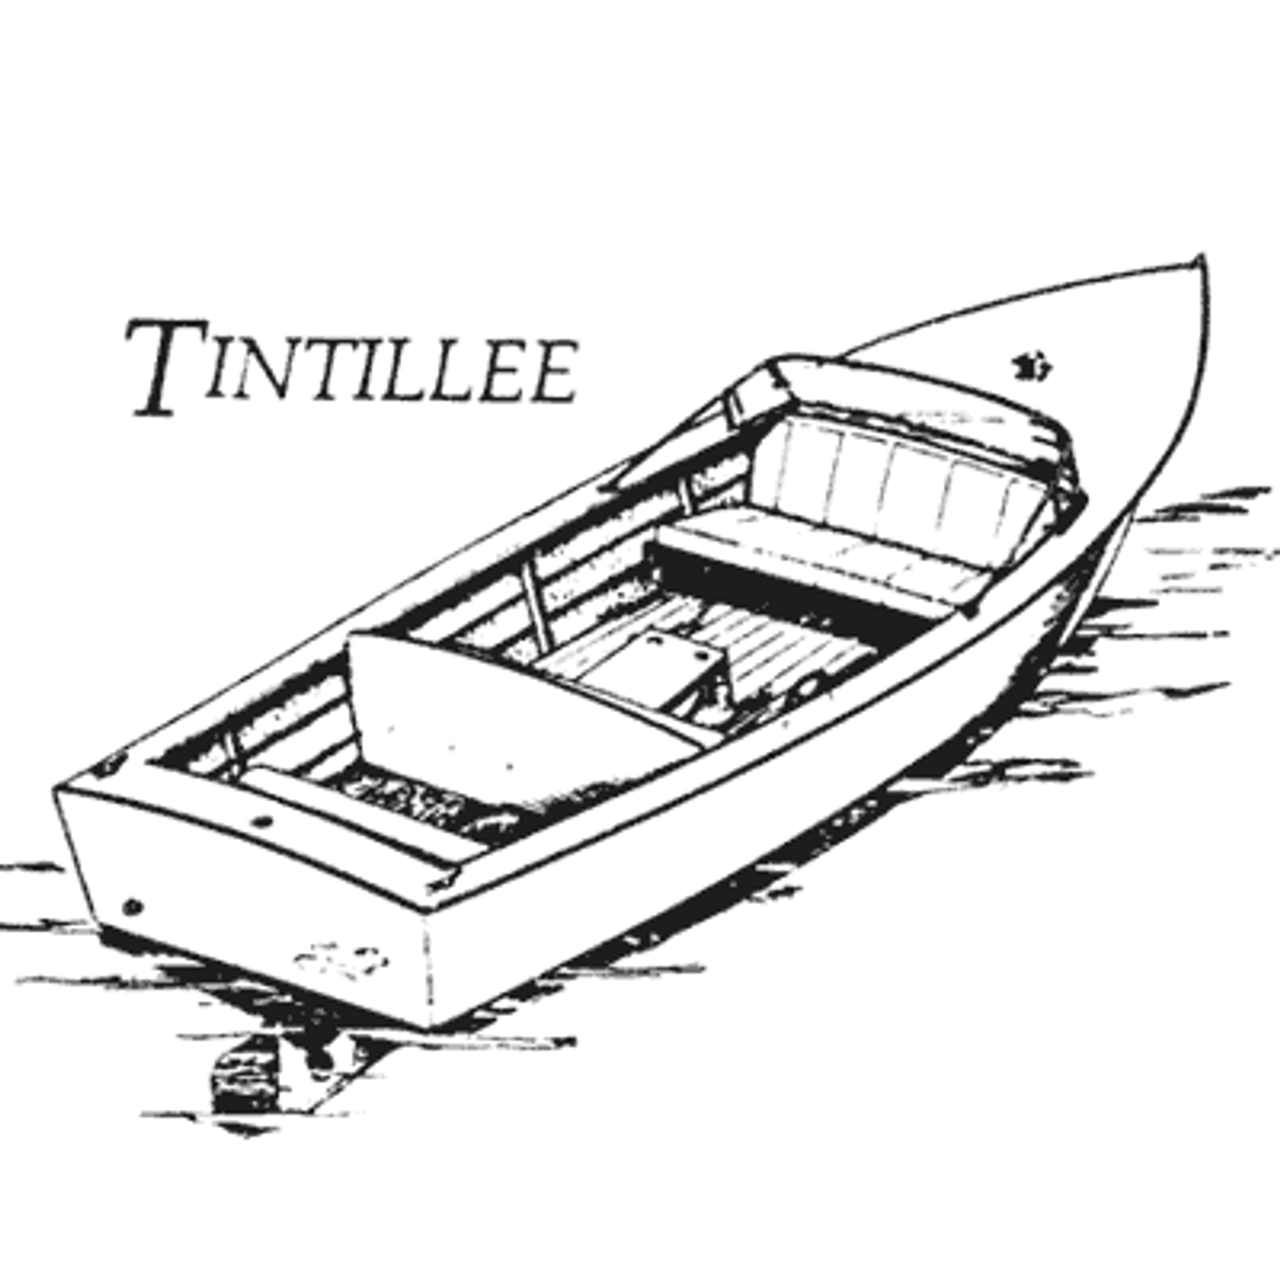 Tintillee Plans PDF